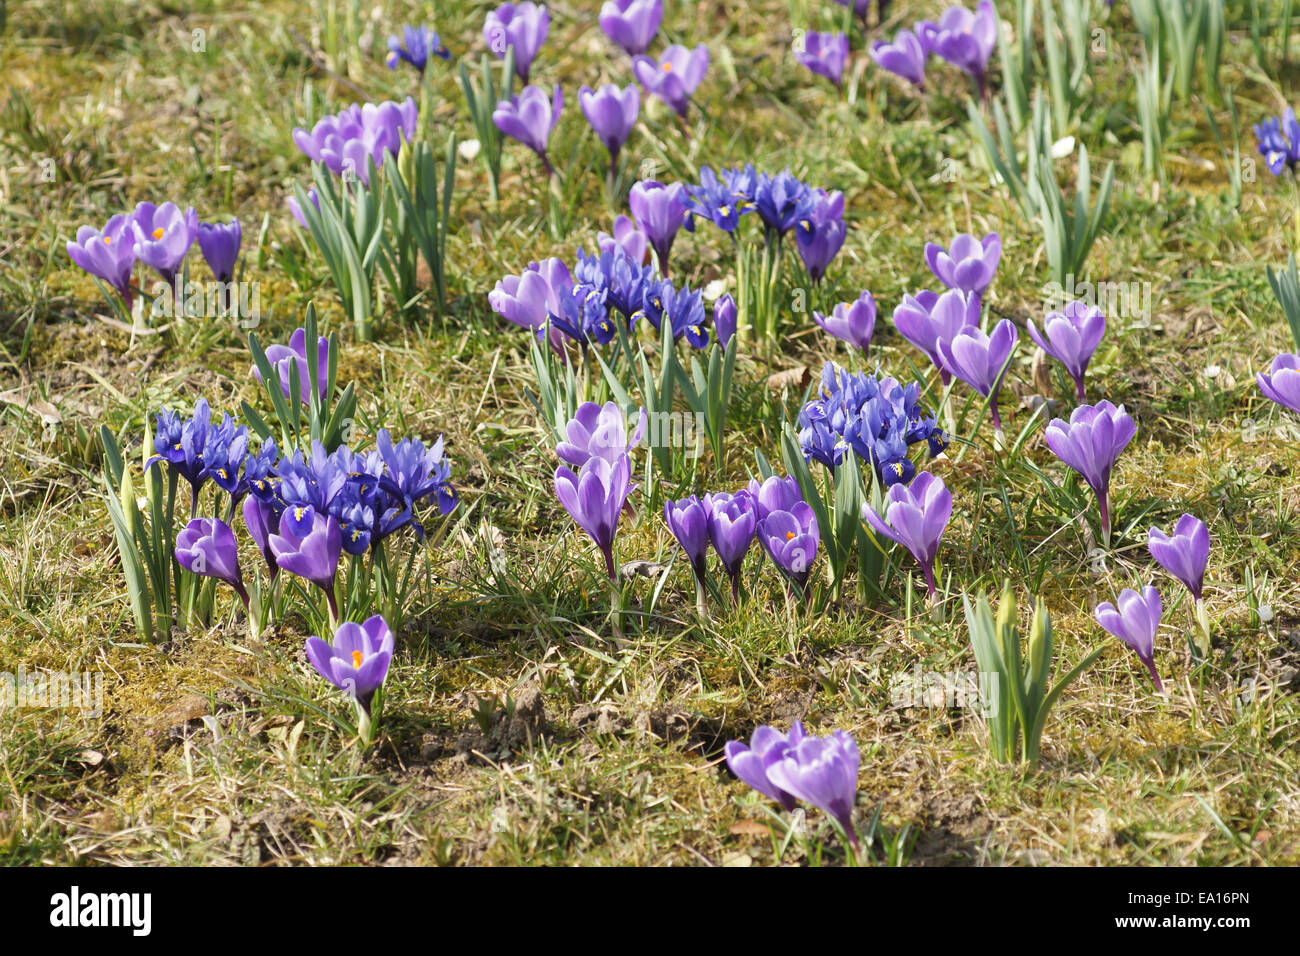 Crocus, Dwarf irises Stock Photo